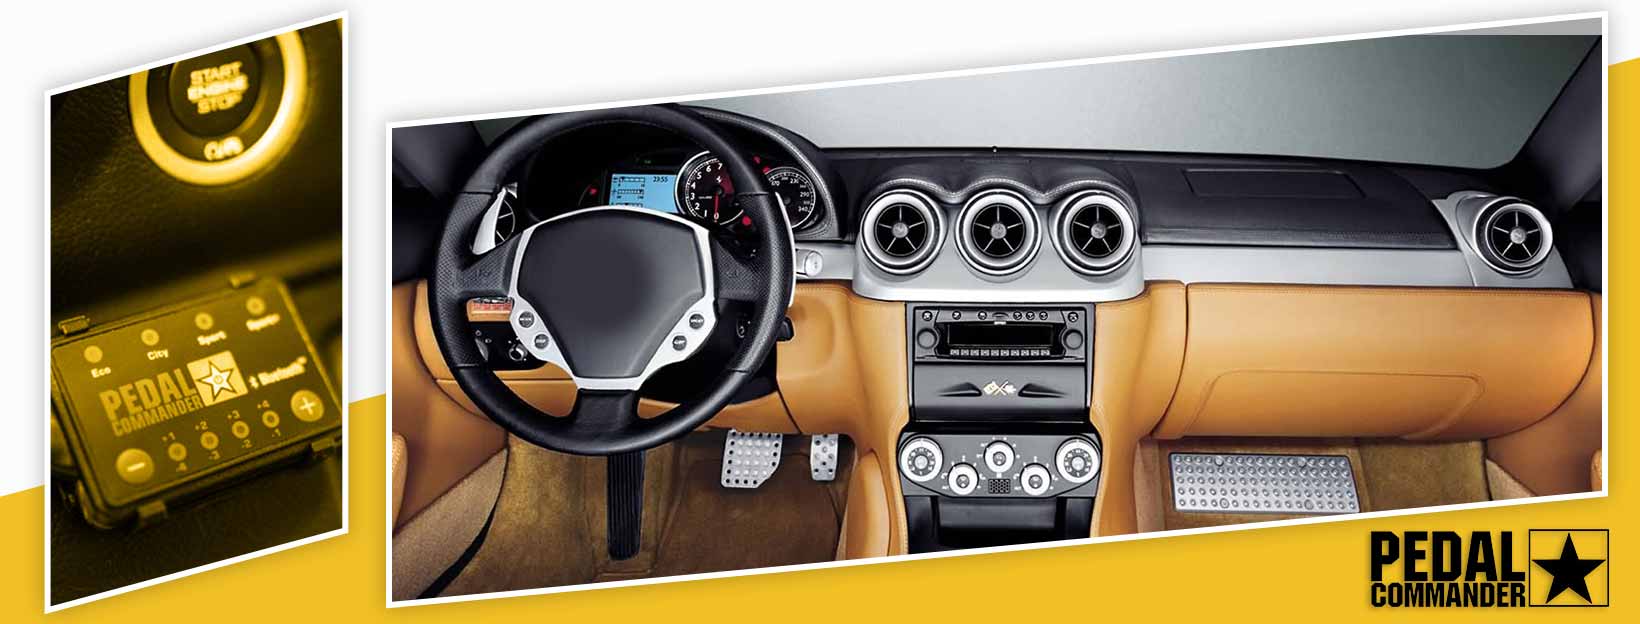 Pedal Commander for Ferrari 612 - interior